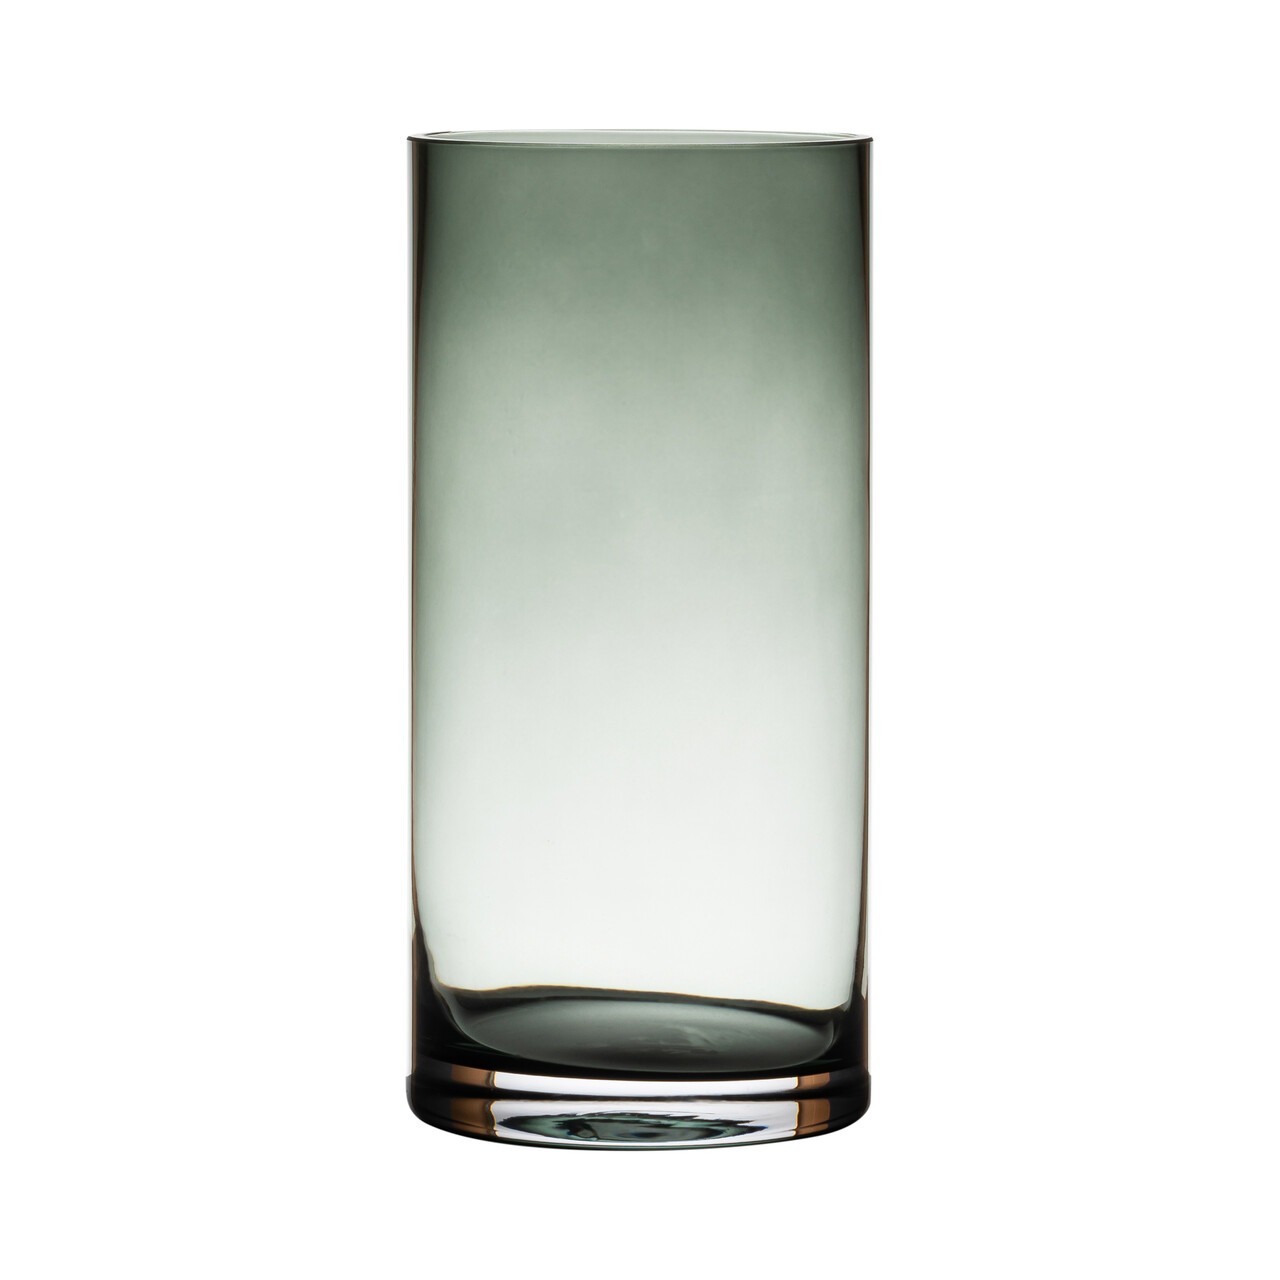 Hakbijl Glass Glazen bloemen cylinder vaas/vazen 25 x 12 cm transparant grijs -